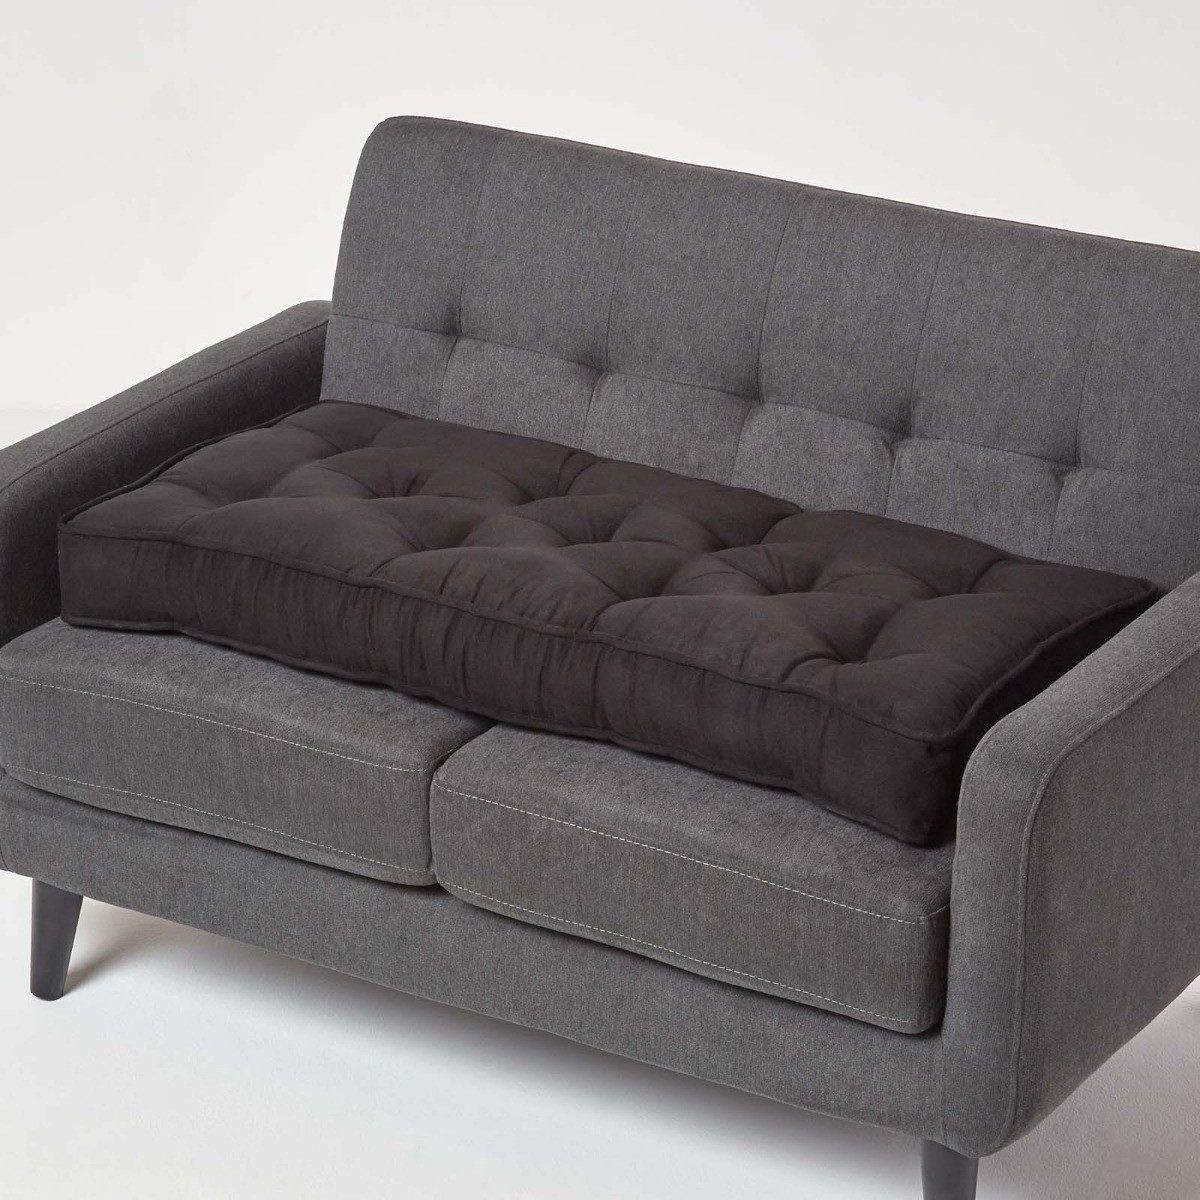 Homescapes Sitzkissen Sofa-Auflage 100 x 48 cm mit Veloursbezug – dickes Sitzkissen schwarz